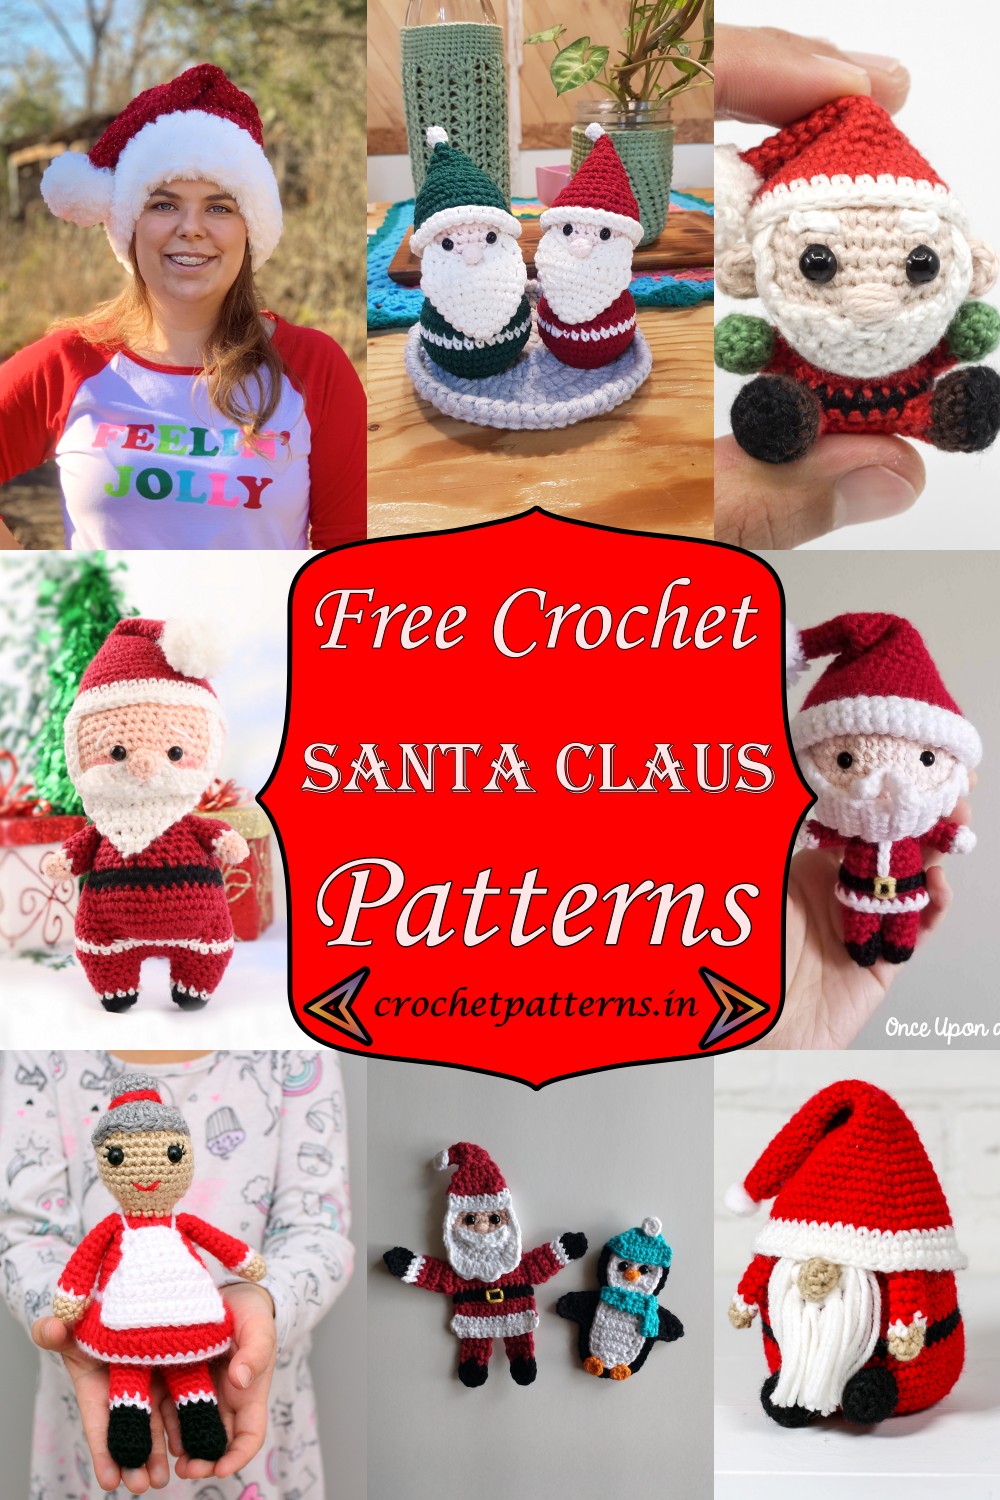 Free Crochet Santa Claus Patterns